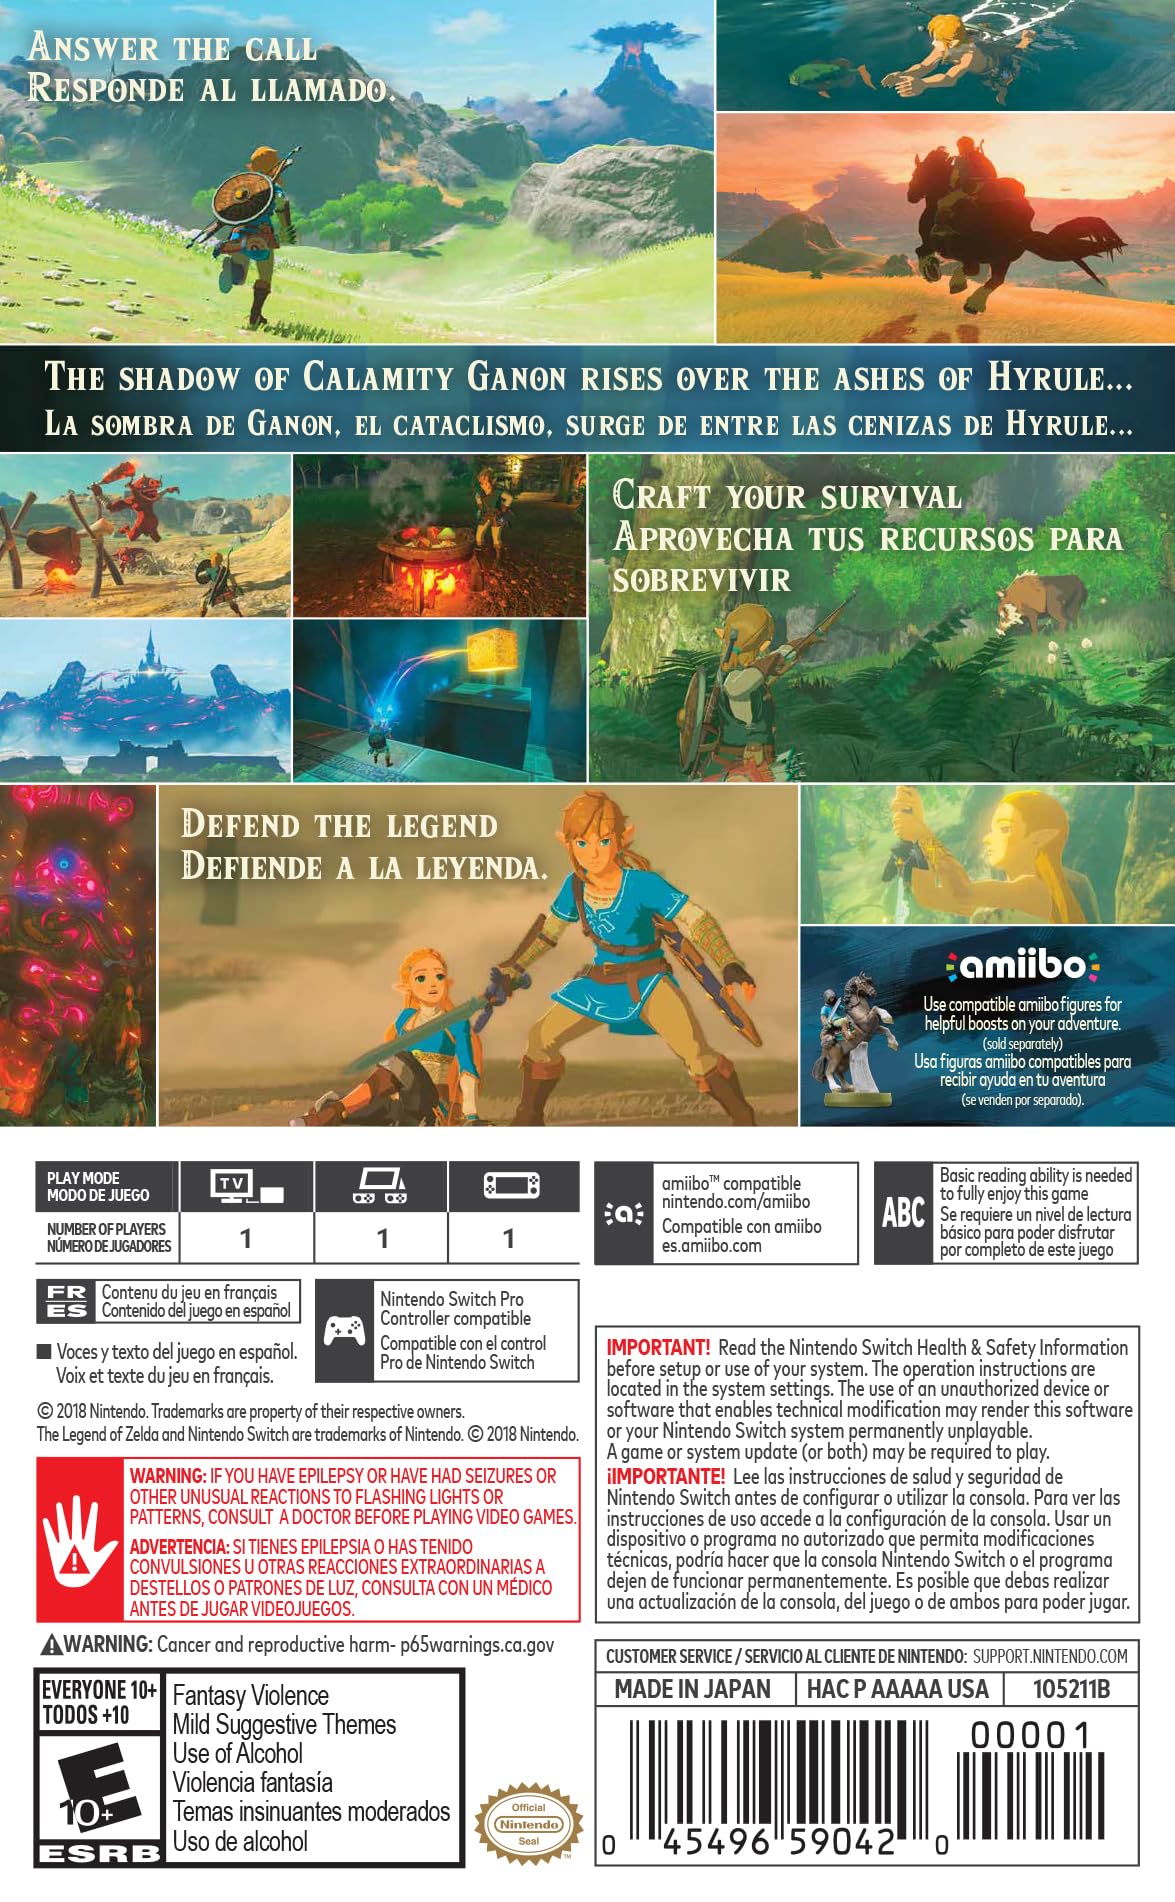 The Legend of Zelda: Breath of the Wild - US Version